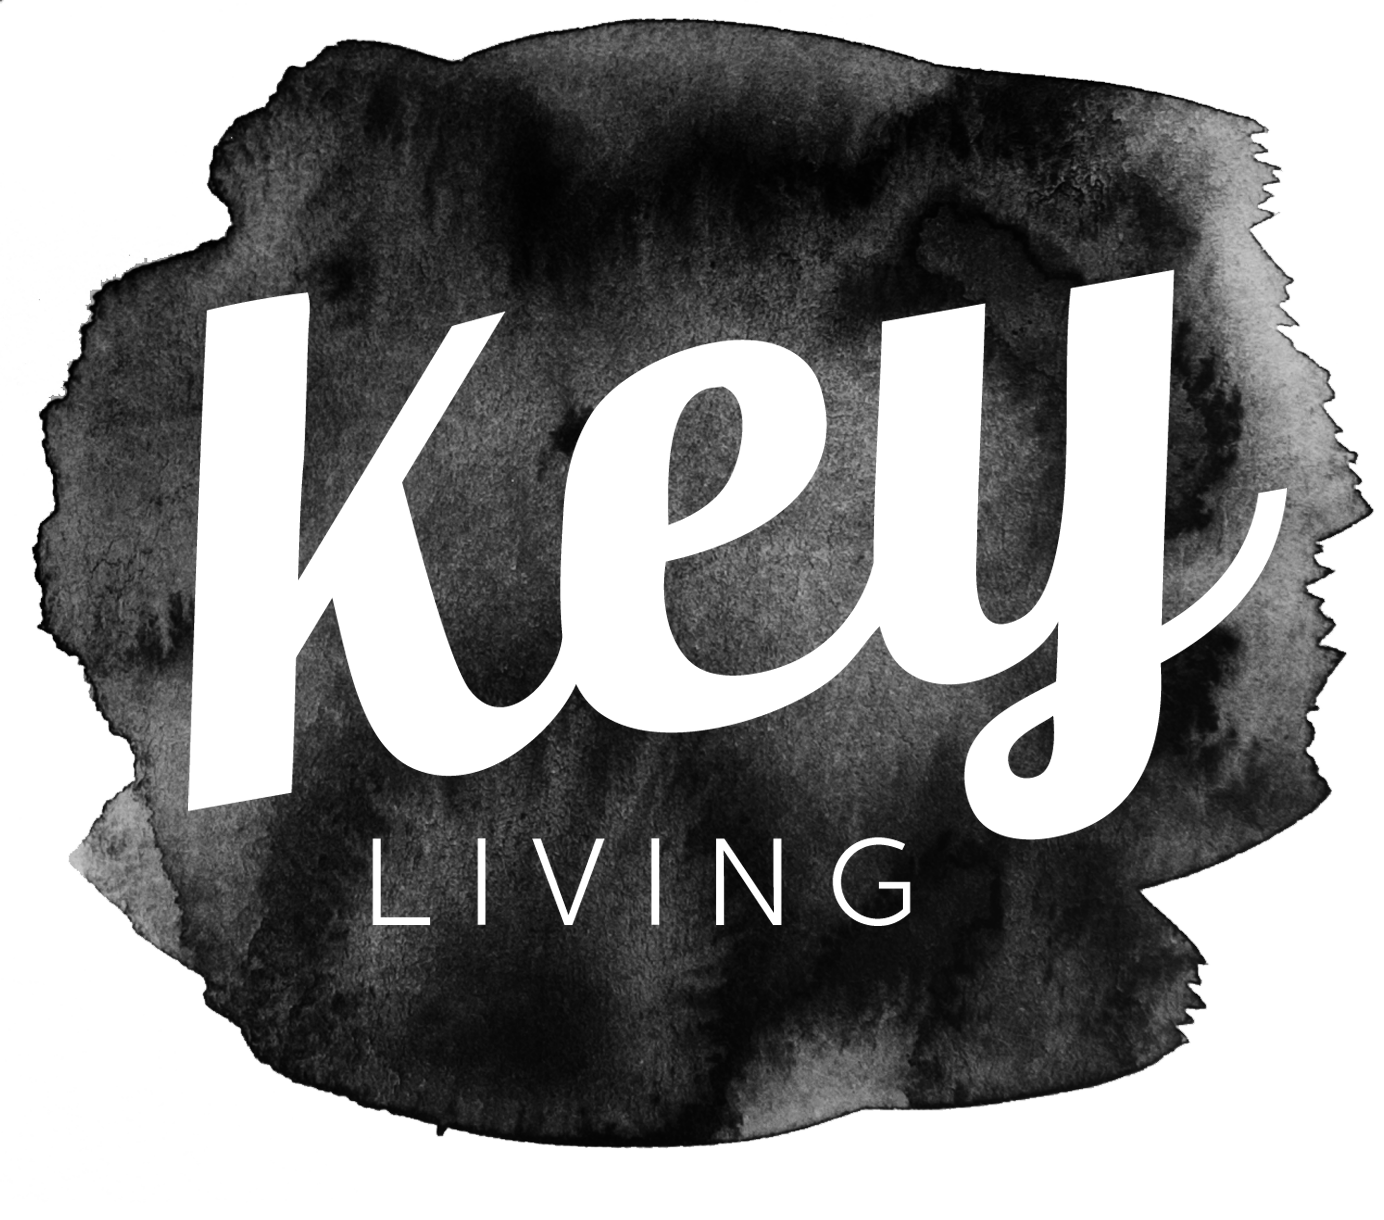 key_logo.png (1011 KB)